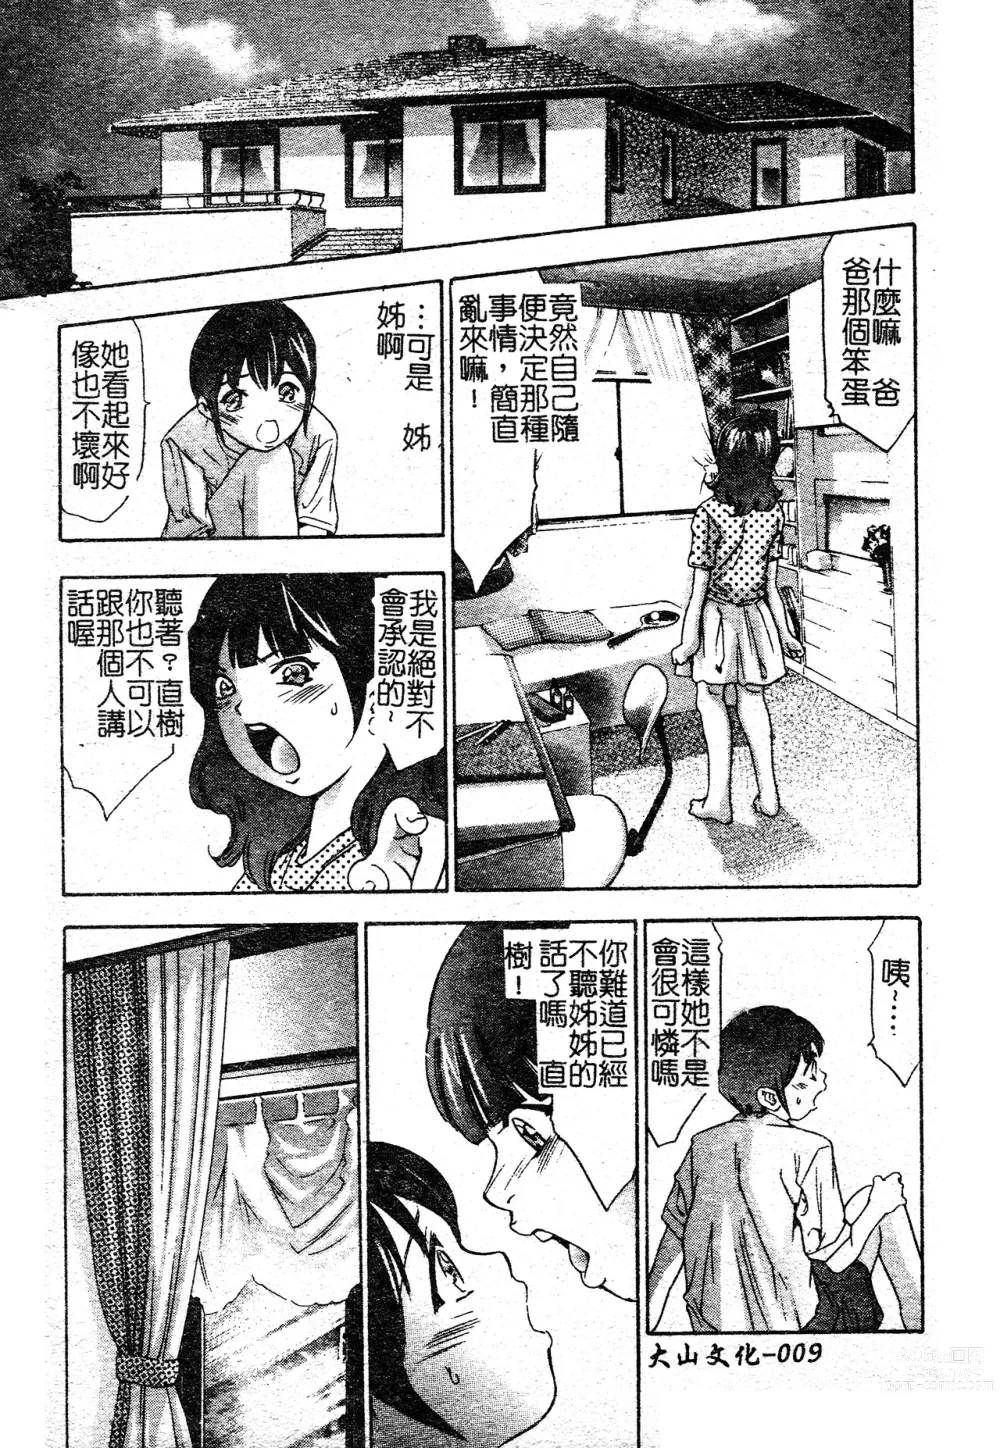 Page 13 of manga Risou no Katachi